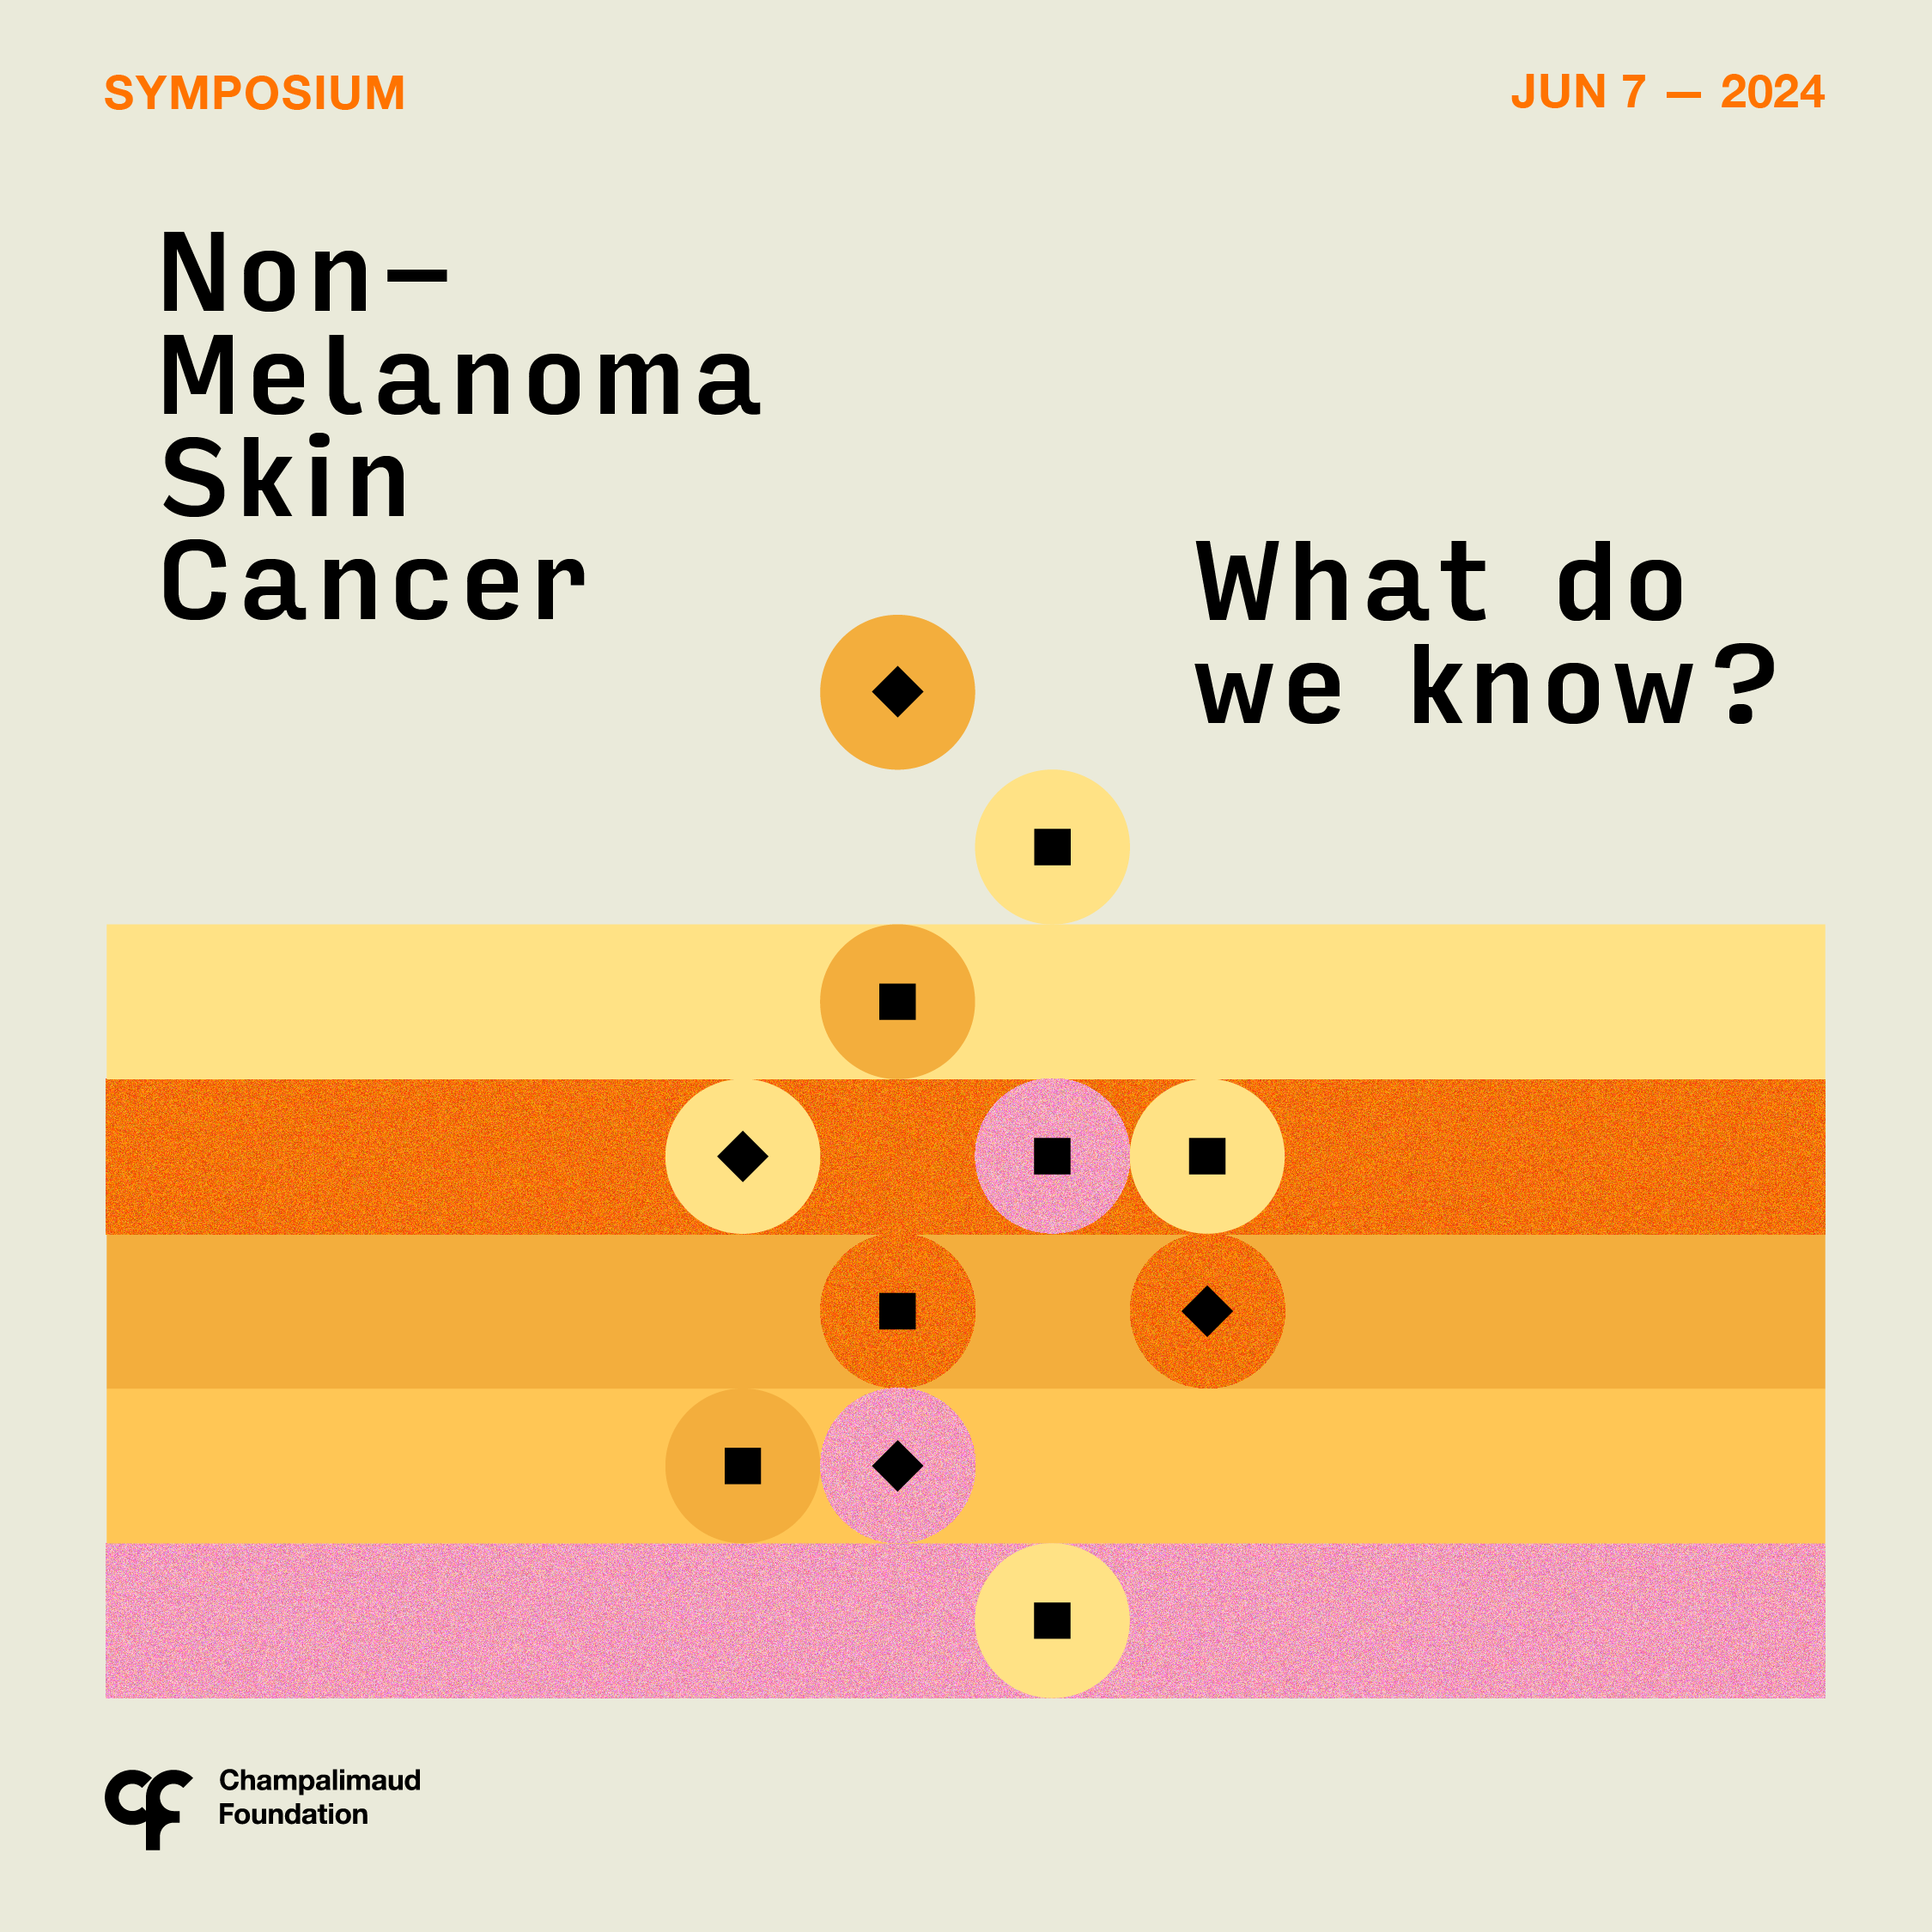 Symposium: Non-Melanoma Skin Cancer. What do we know?